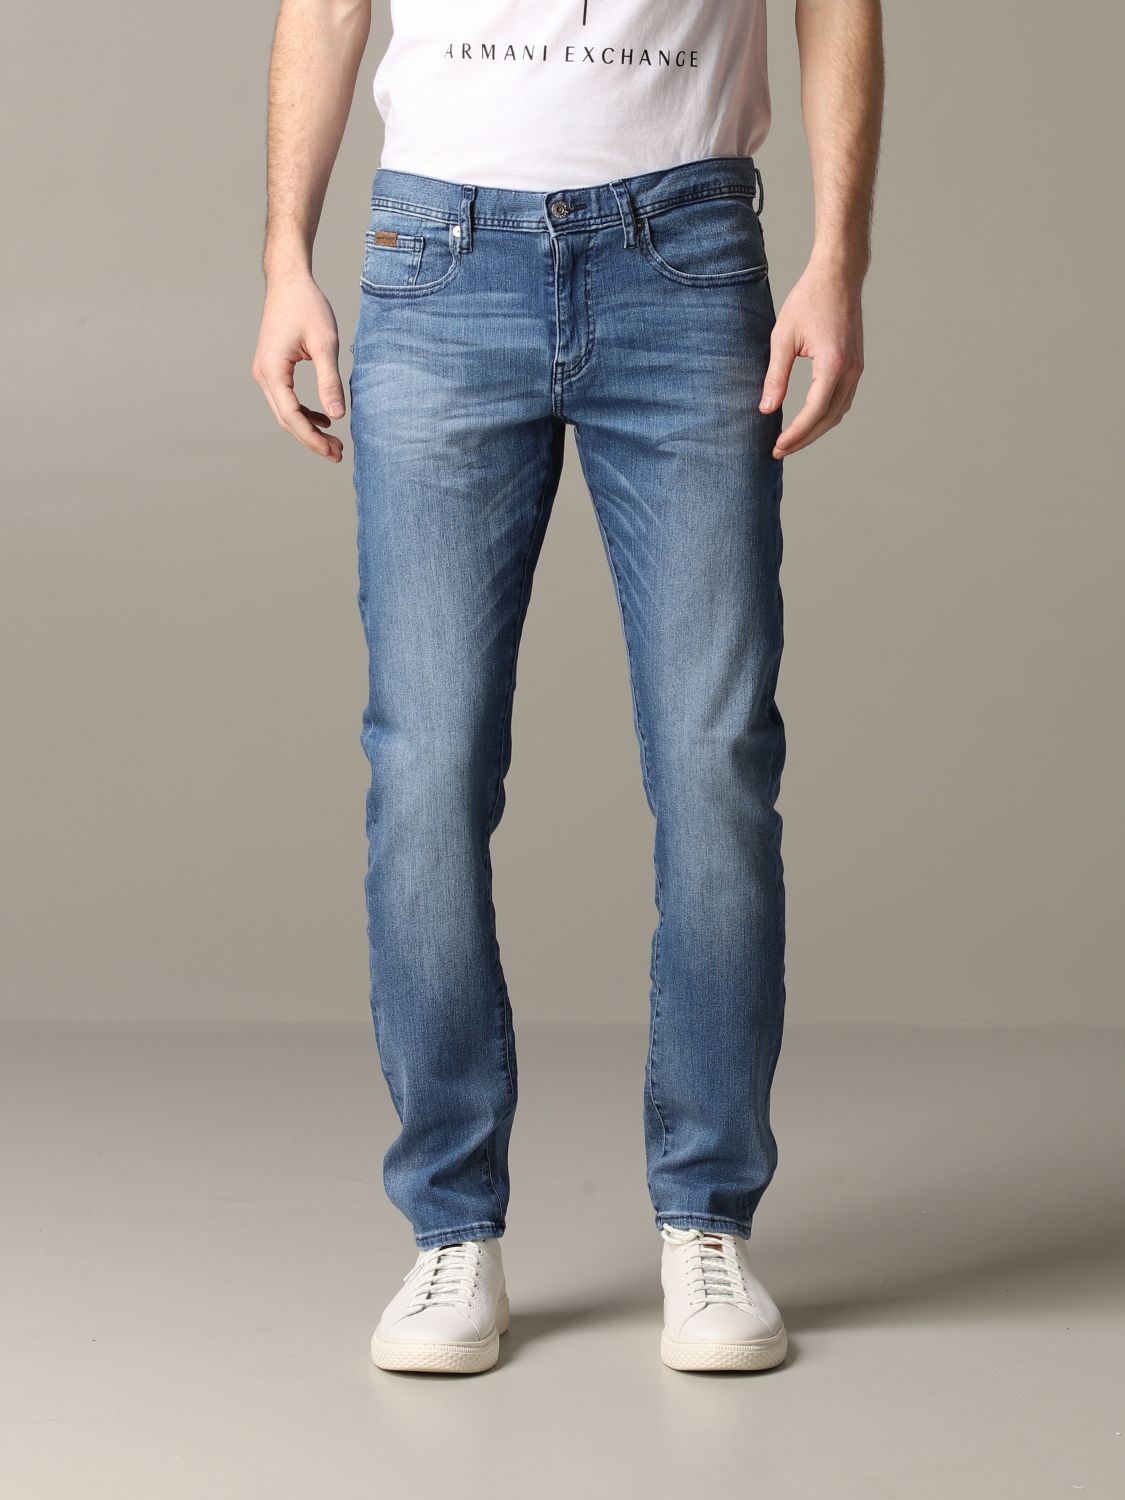 Armani Exchange slim fit jeans | Jeans 